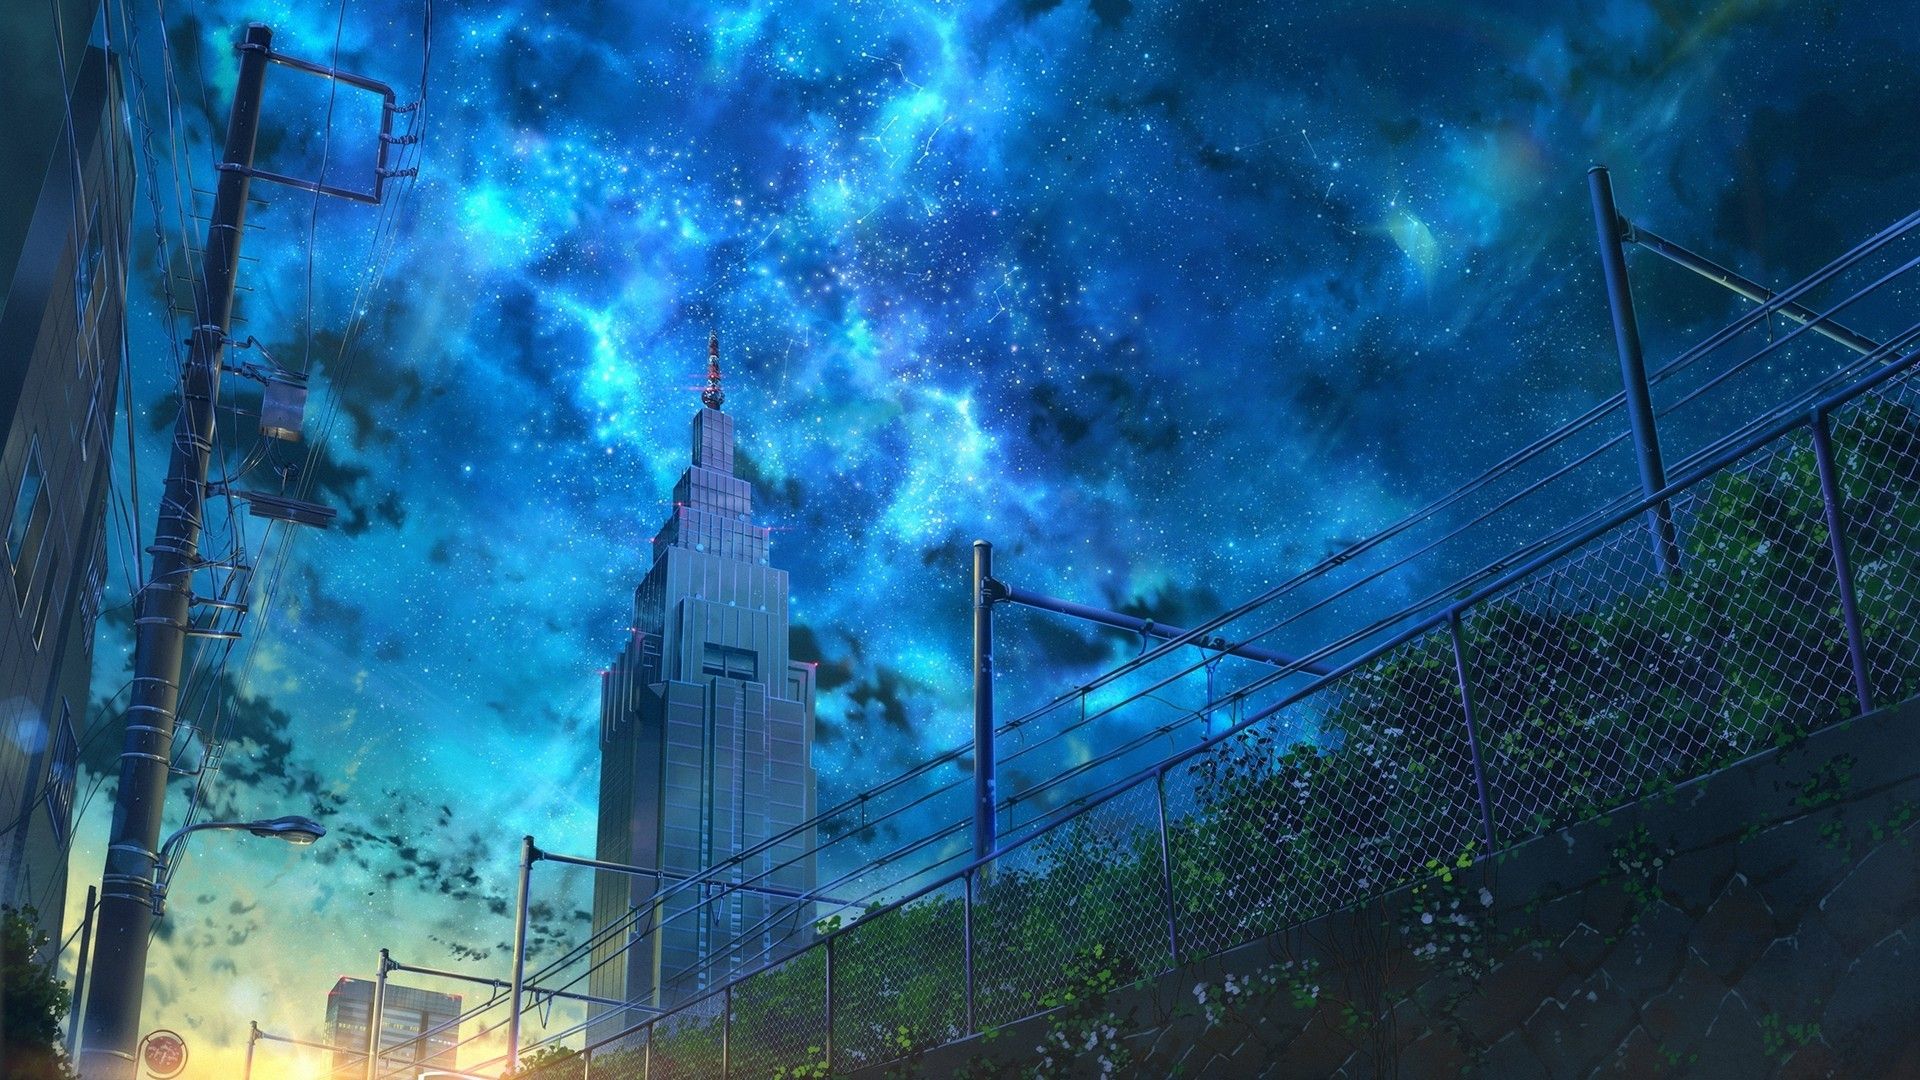 Download 1920x1080 Anime Skyscraper, Night, Stars, Scenic, Fence, Street Wallpaper for Widescreen